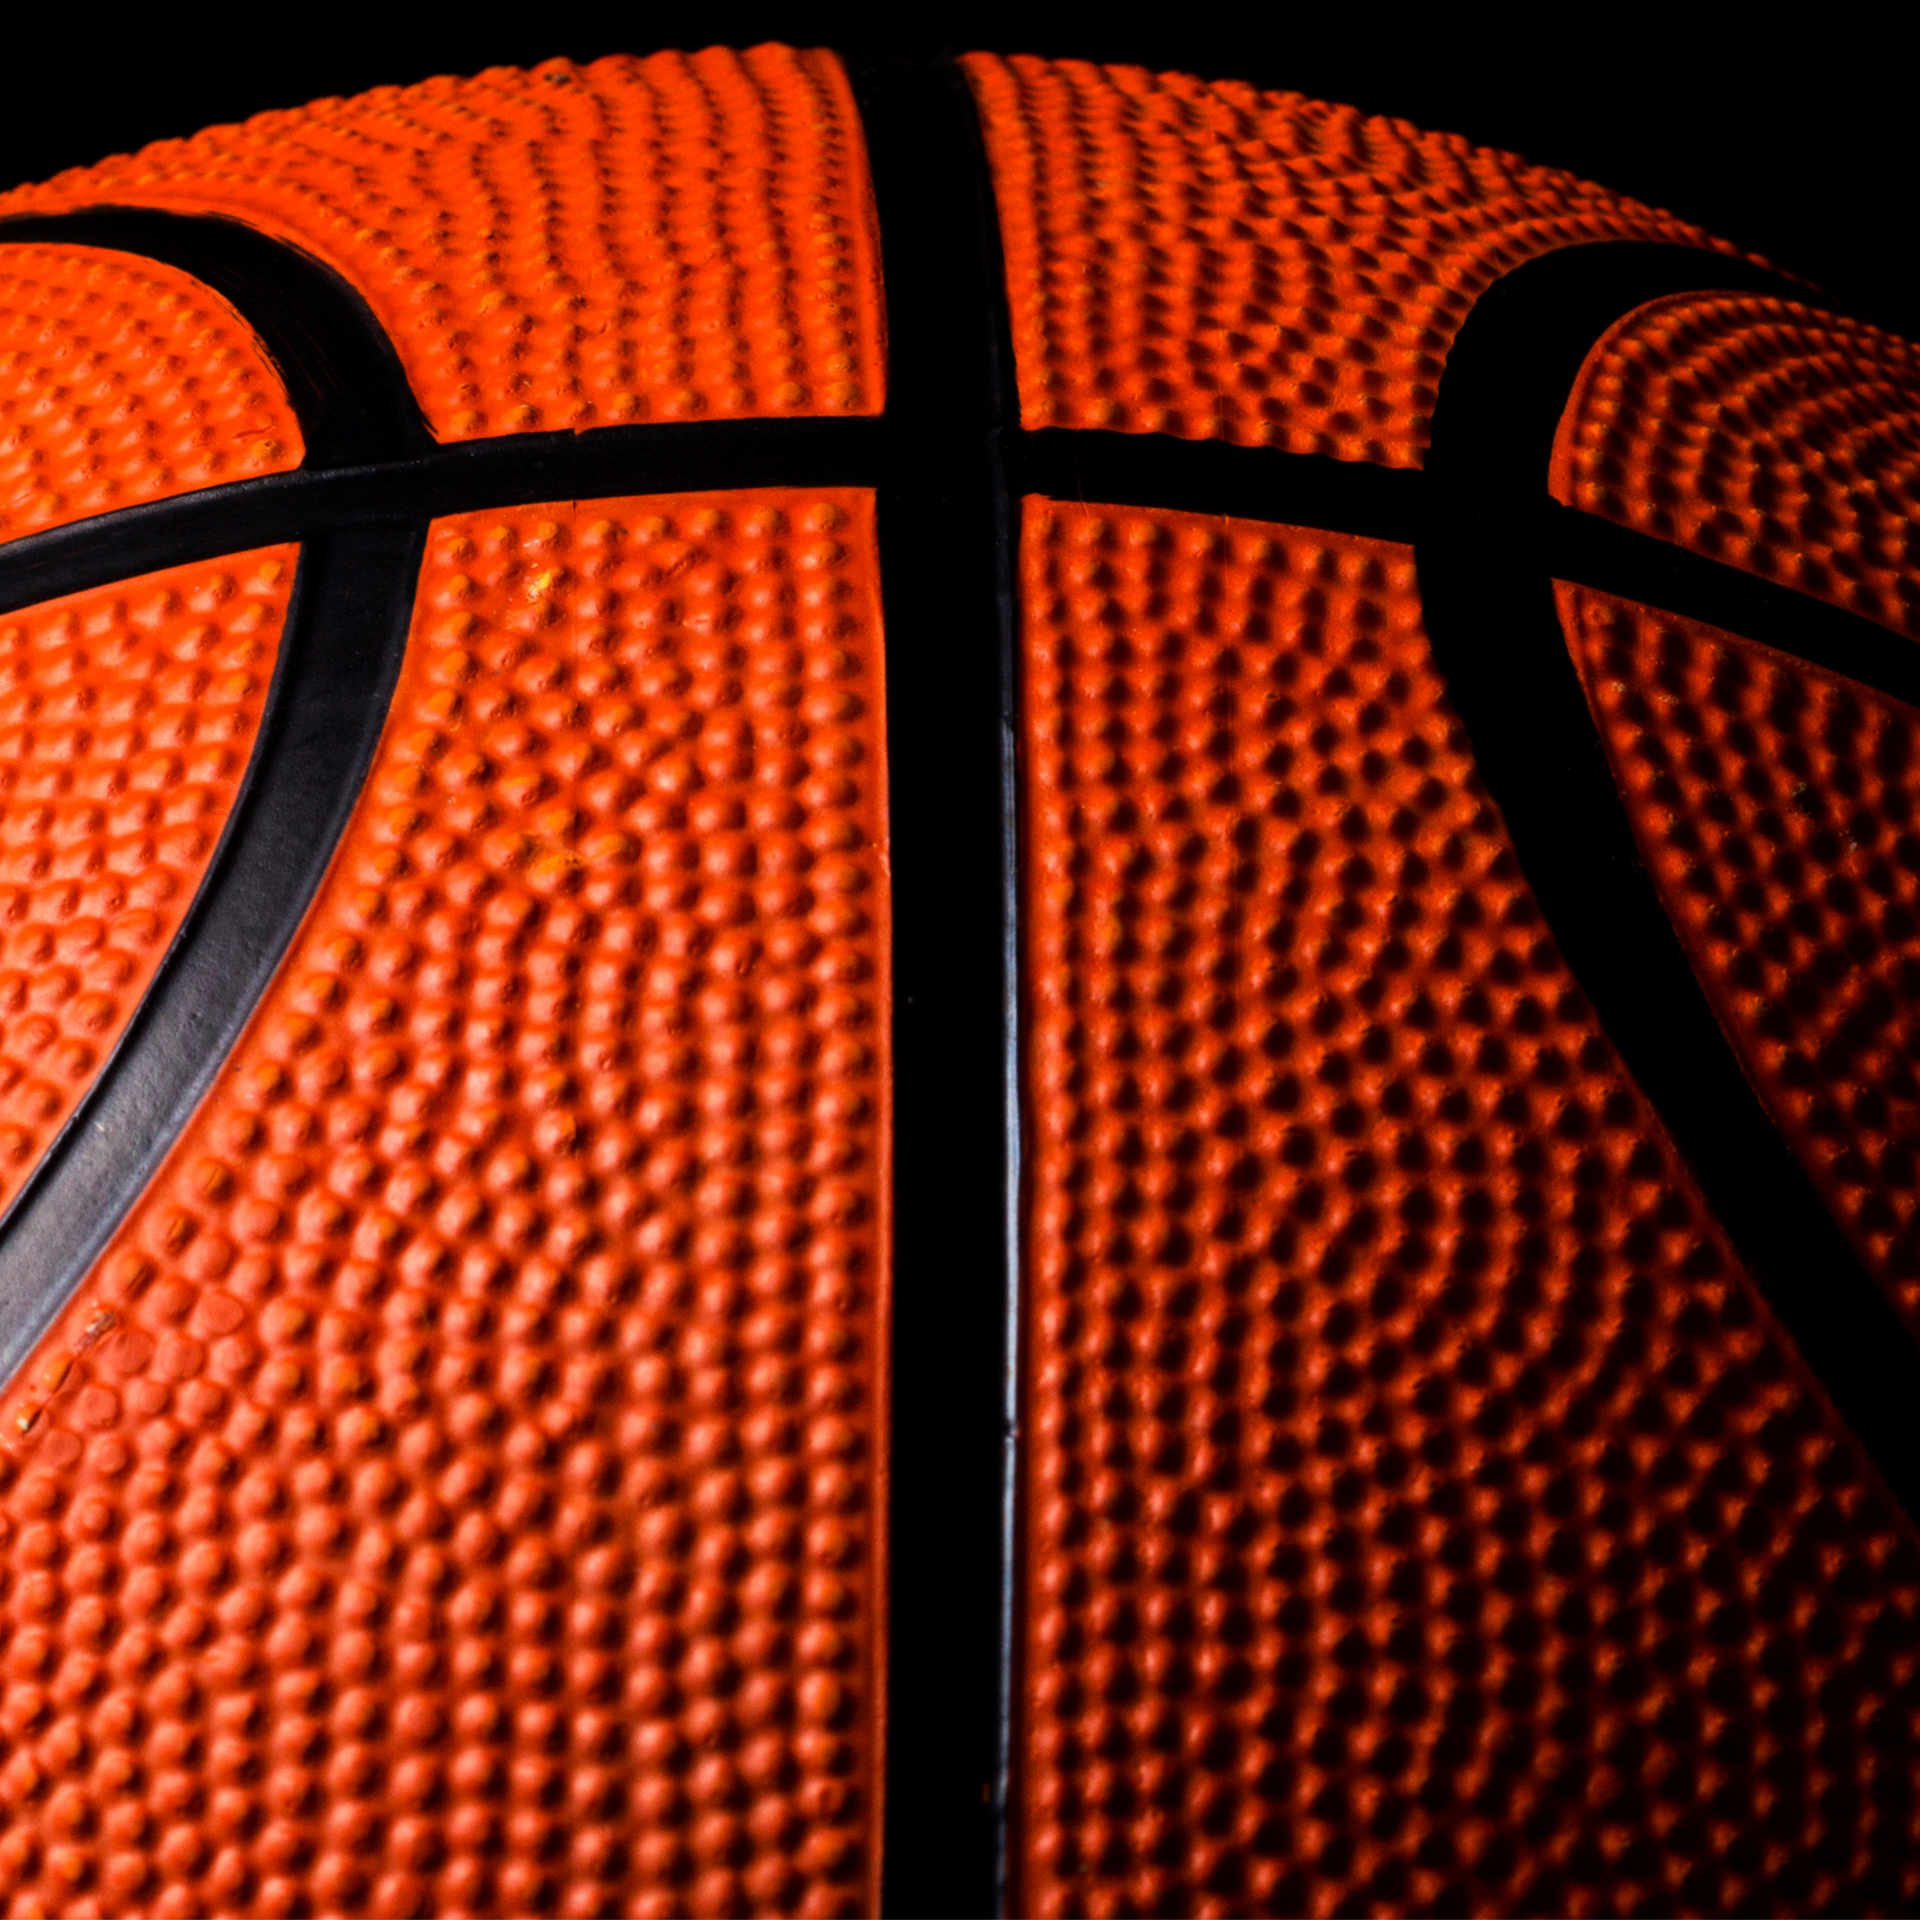 A close-up of a basketball.